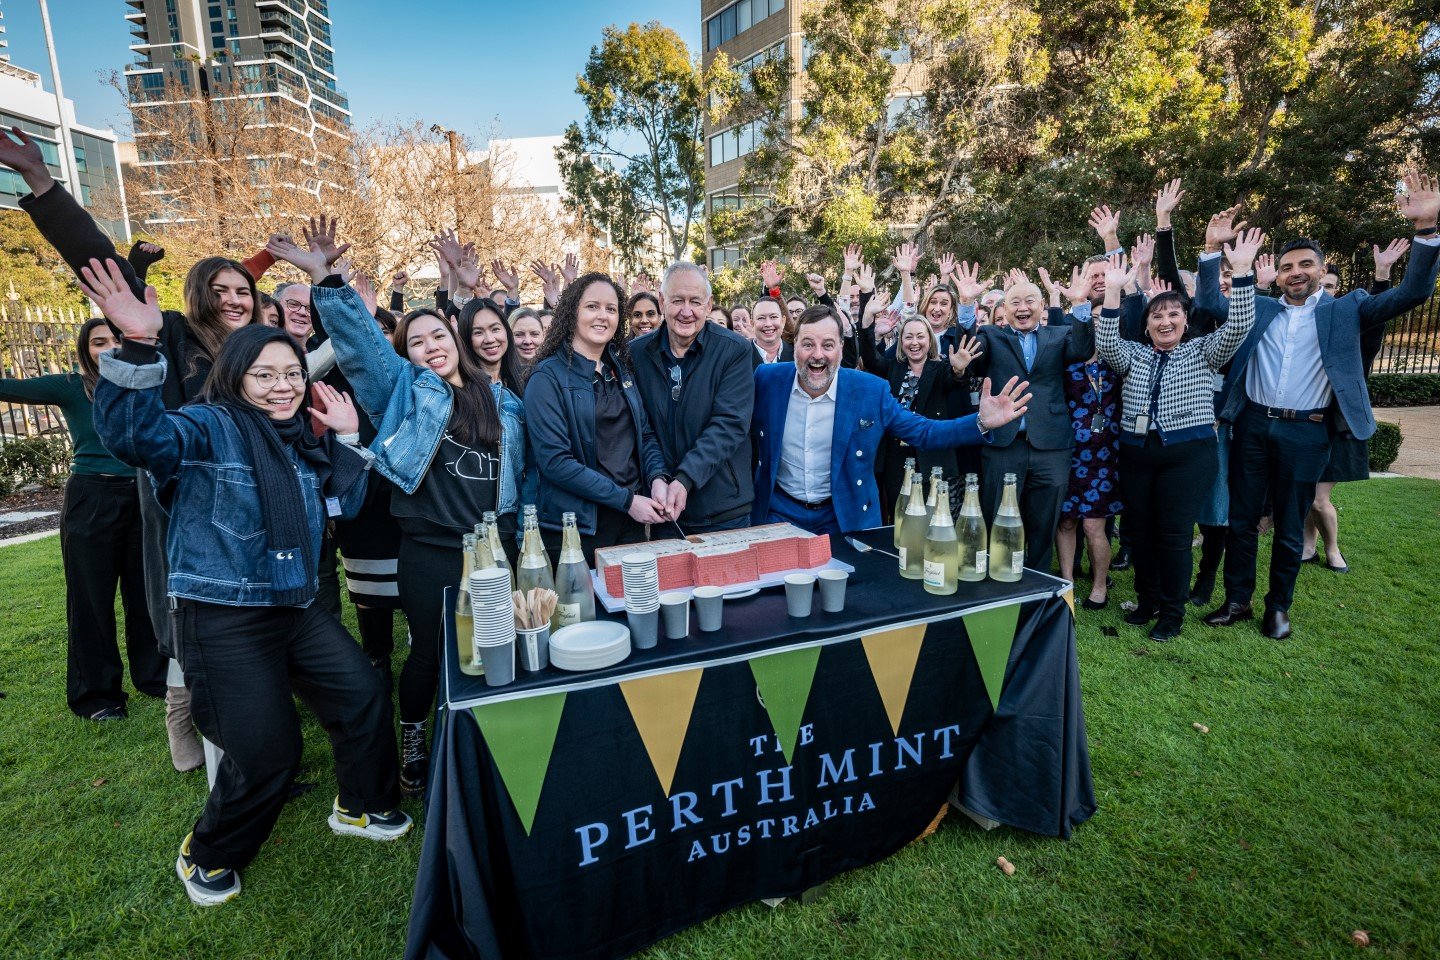 Perth Mint staff celebrating their 125th birthday